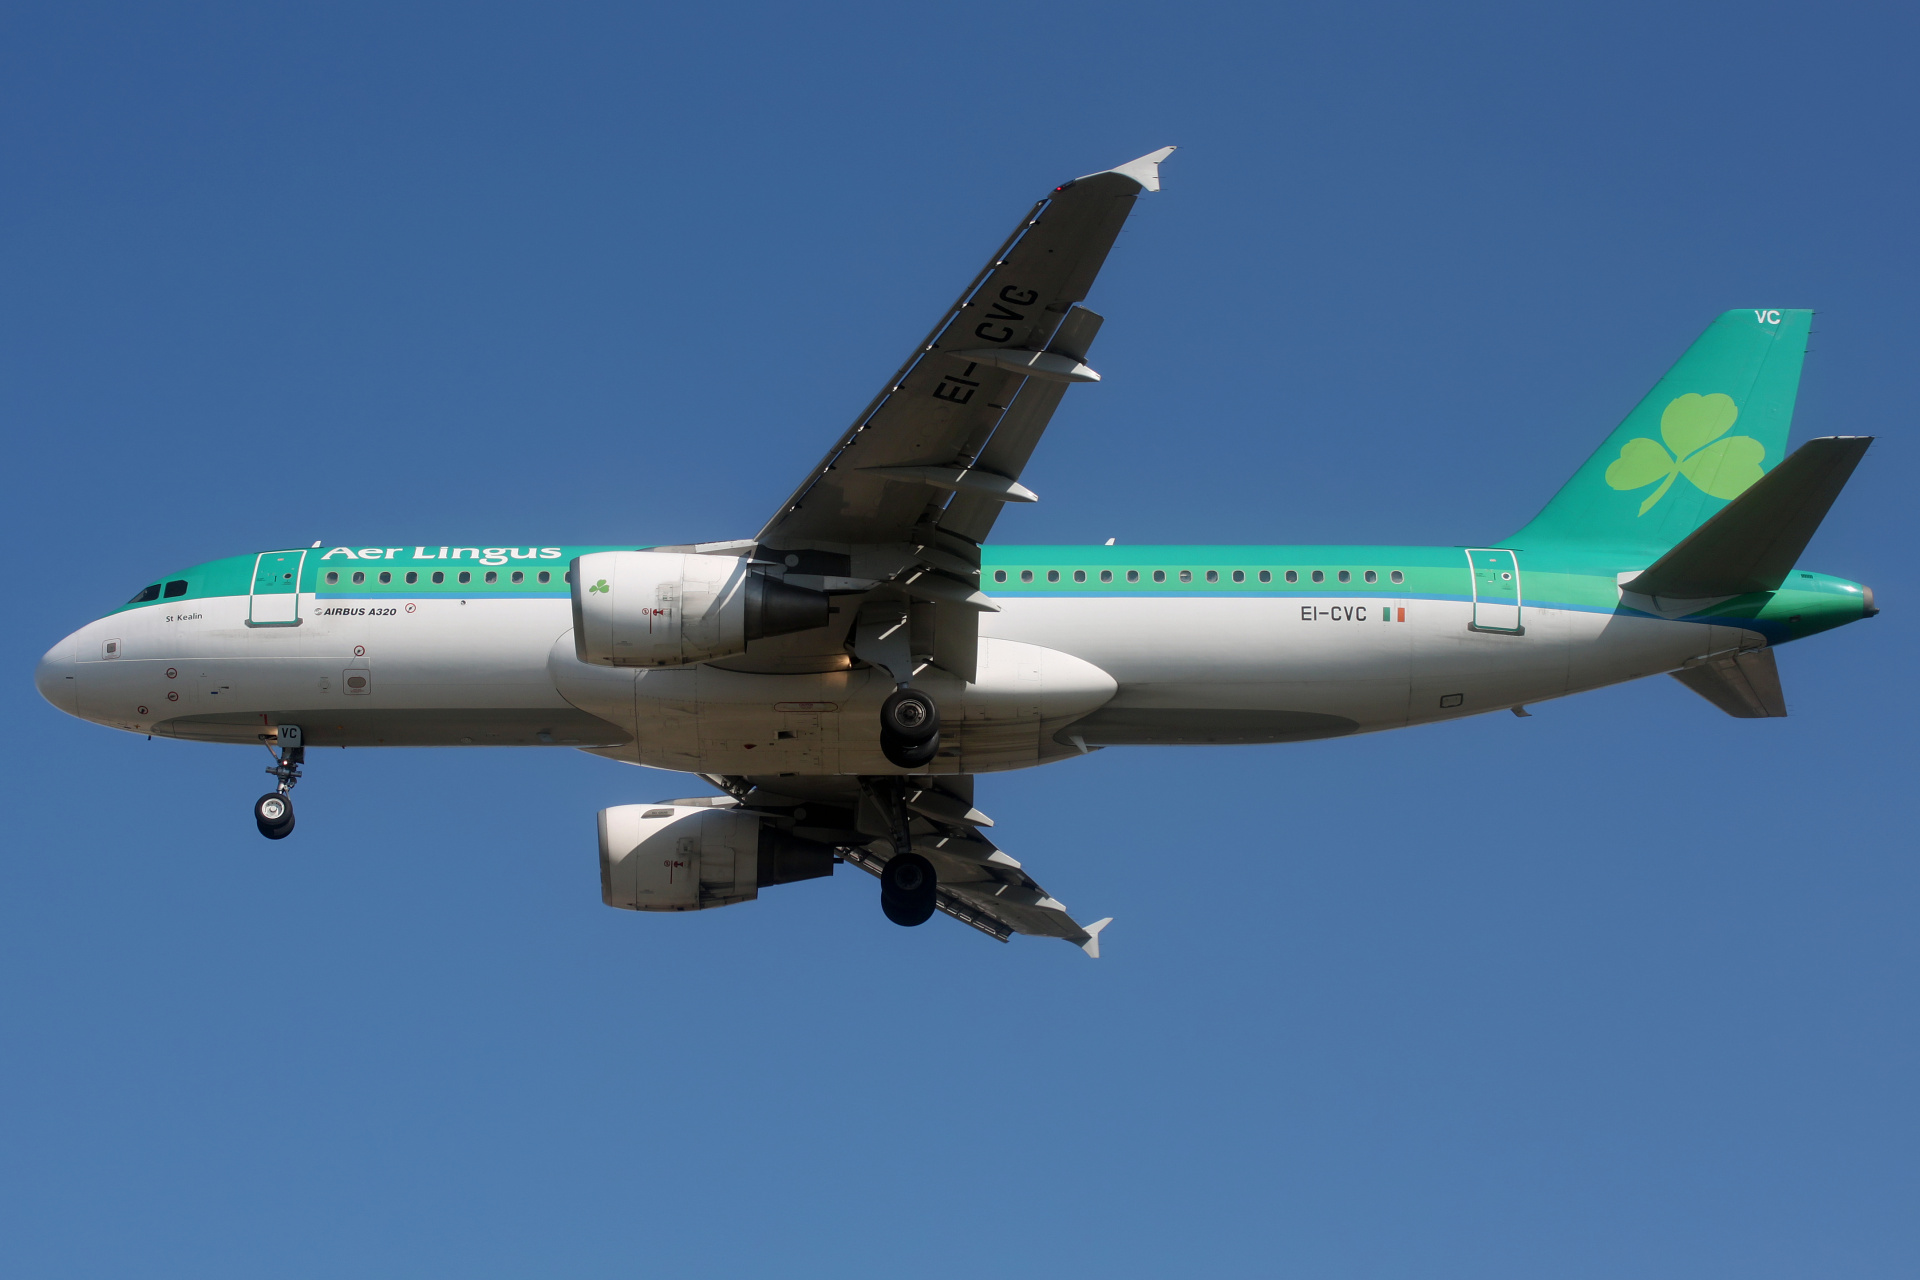 EI-CVC (Aircraft » EPWA Spotting » Airbus A320-200 » Aer Lingus)